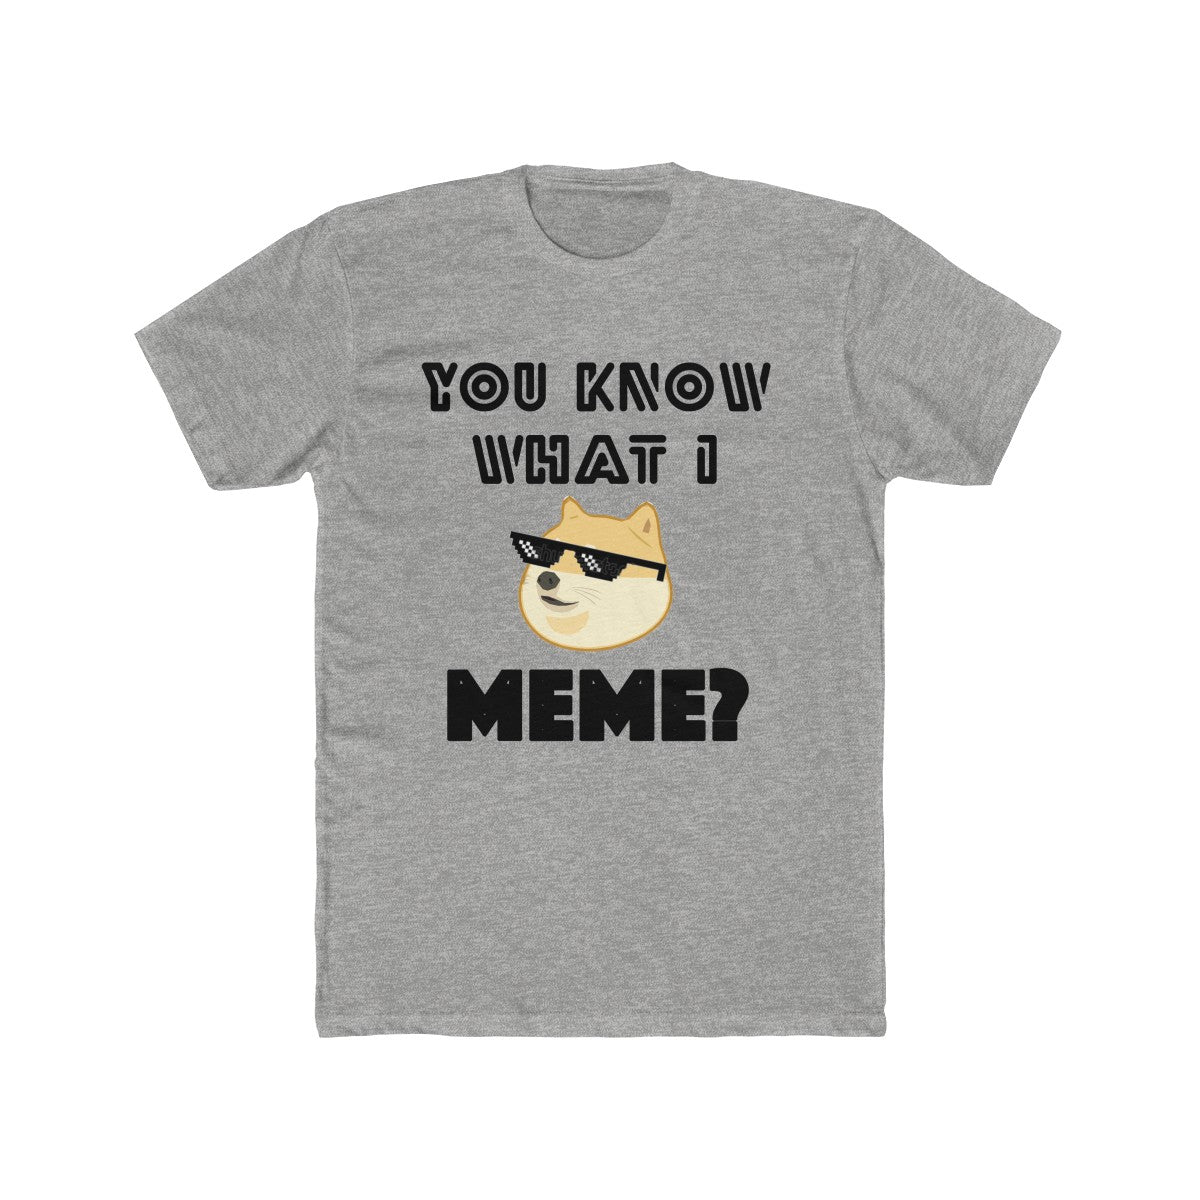 Funny Meme T-shirt, Graphic Tees, Dank Meme T-shirt, Funny Shirt